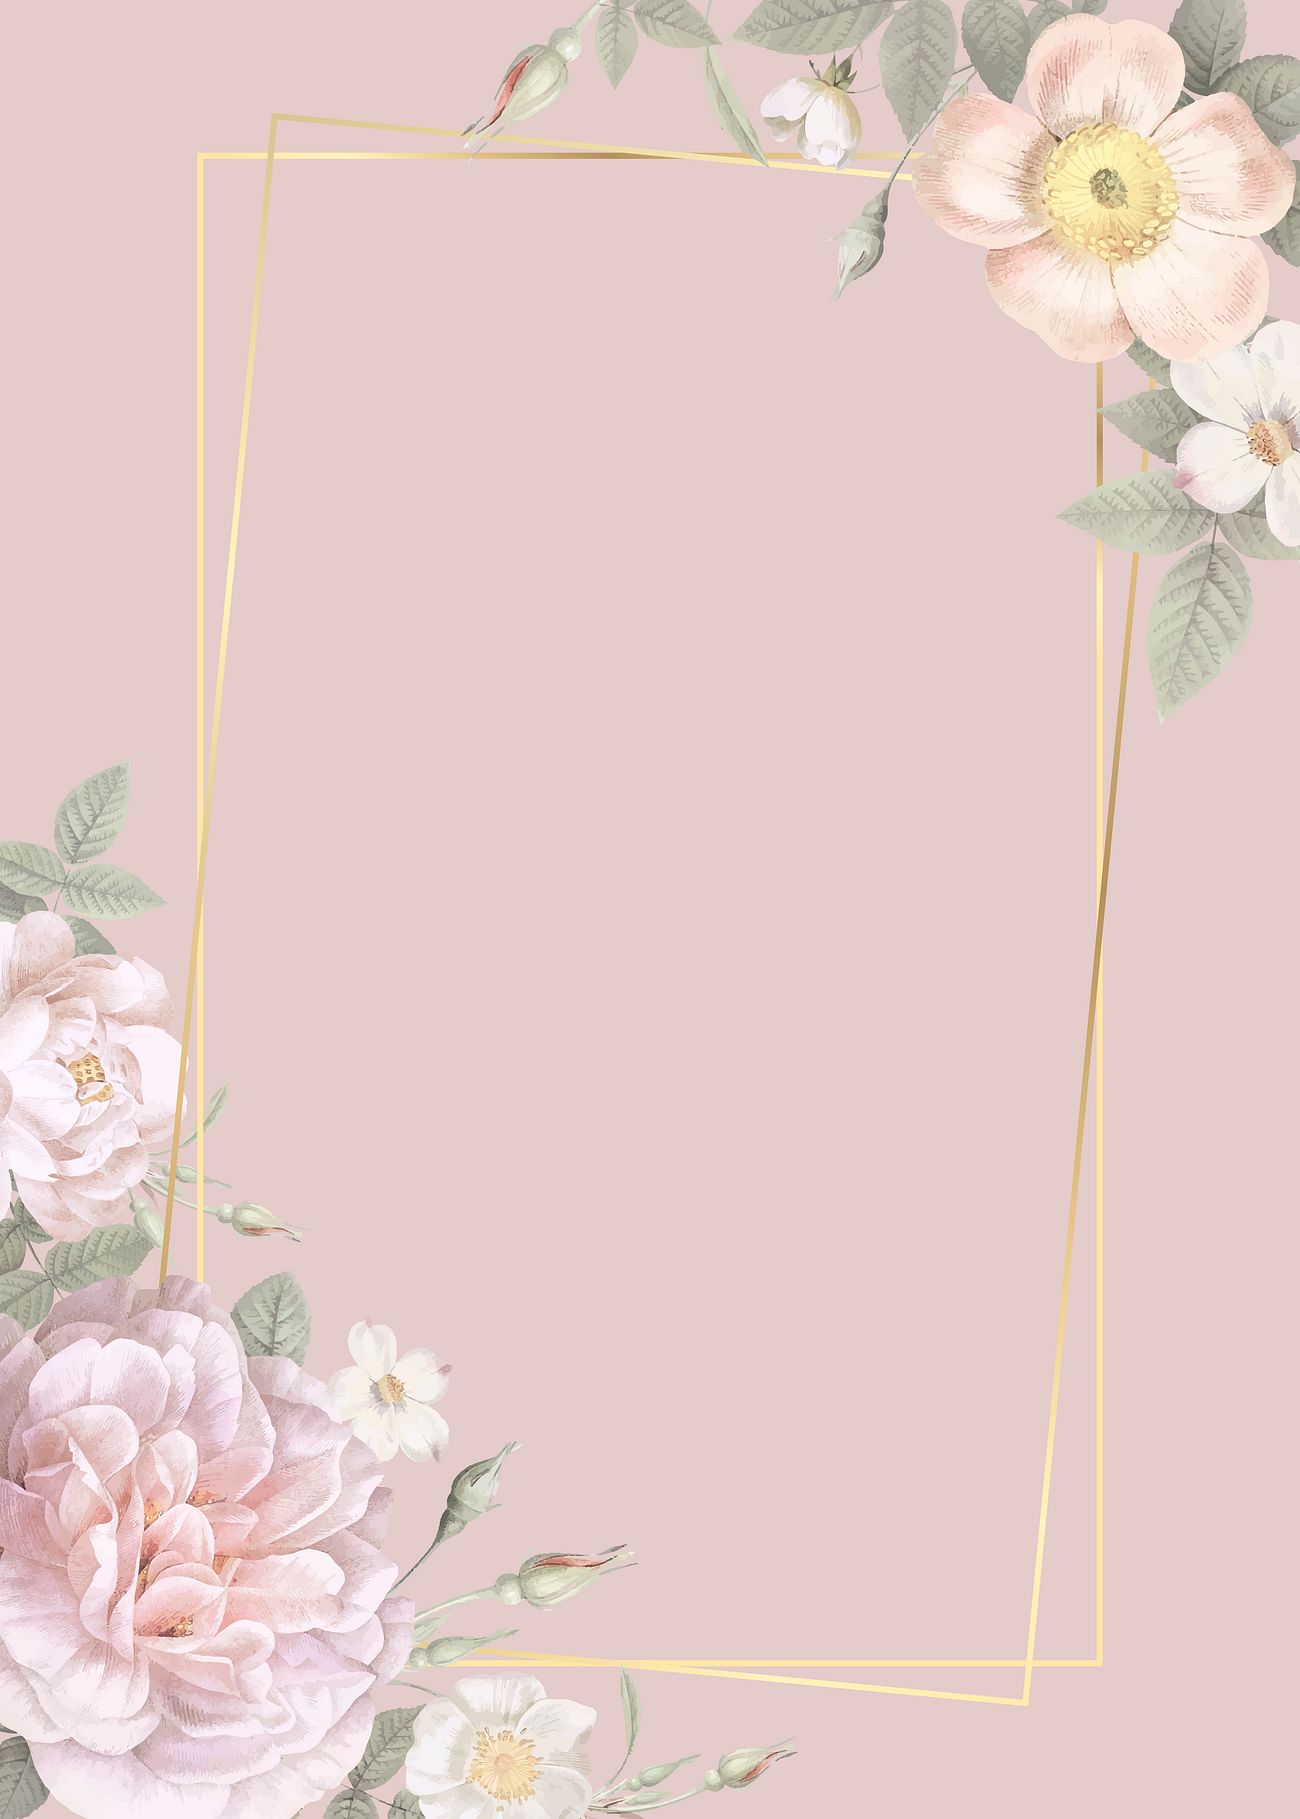 Download Feminine floral rectangle frame | Royalty free vector - 846206